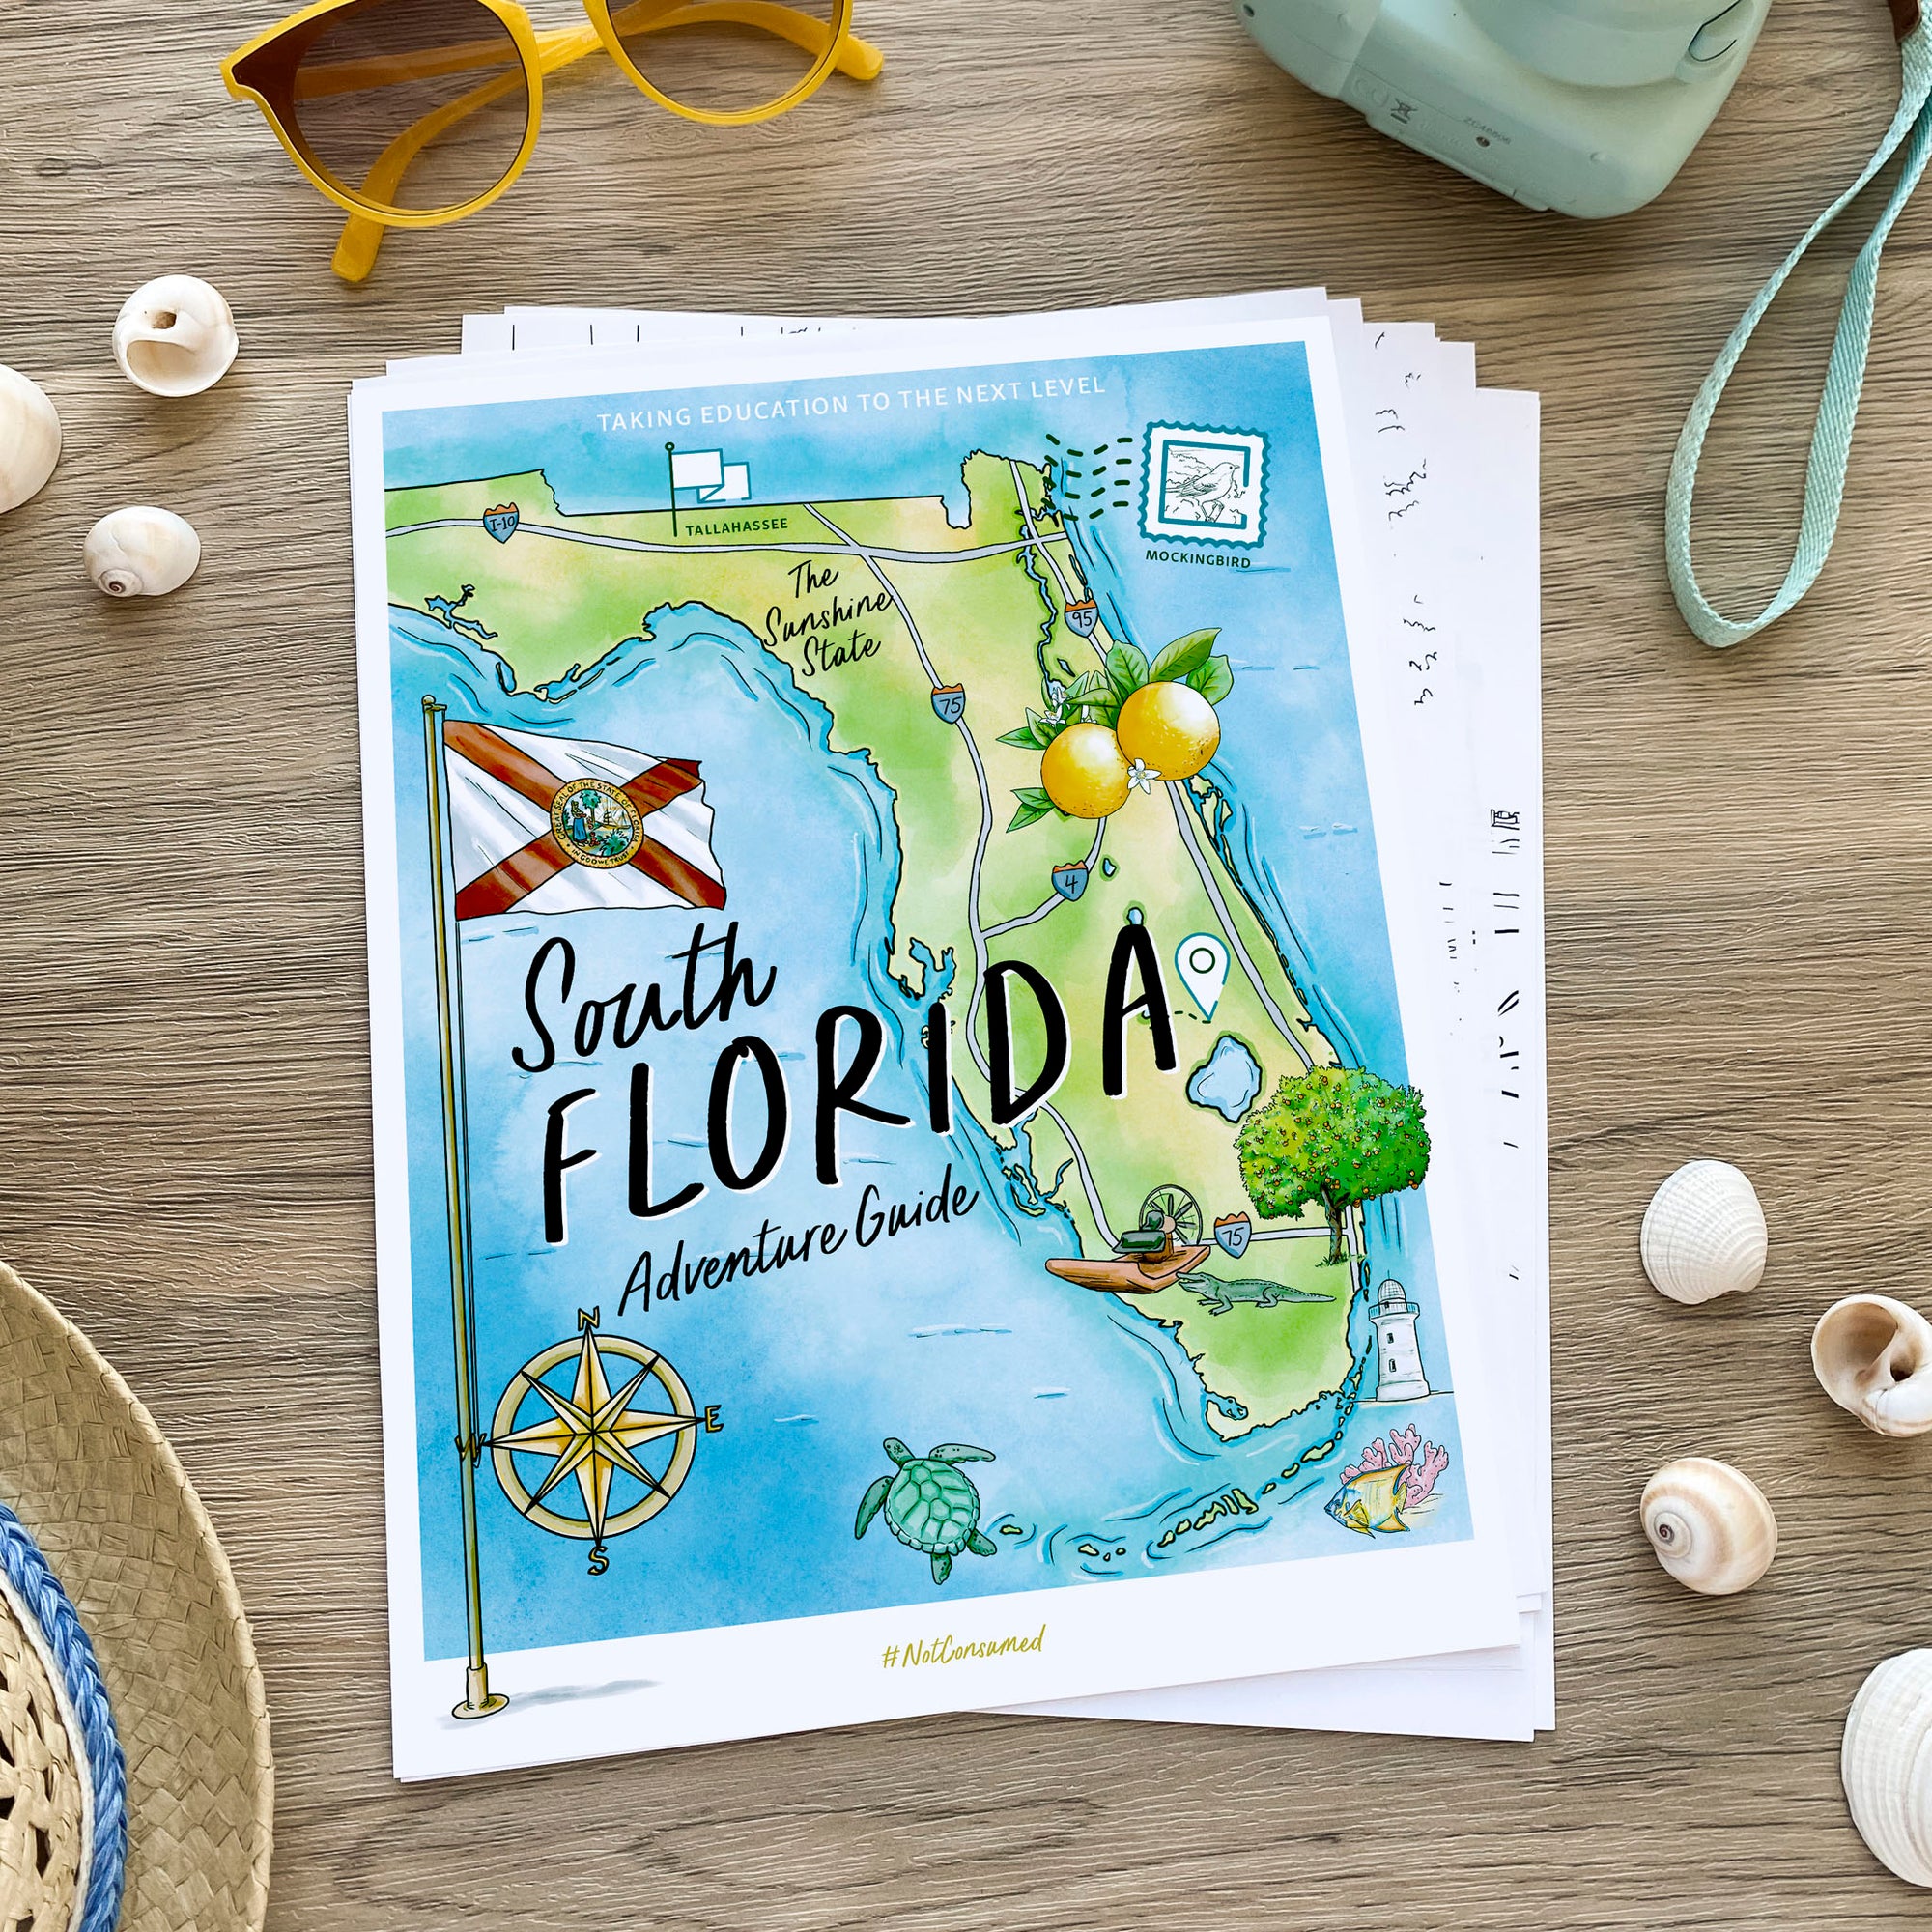 South Florida Adventure Guide printable